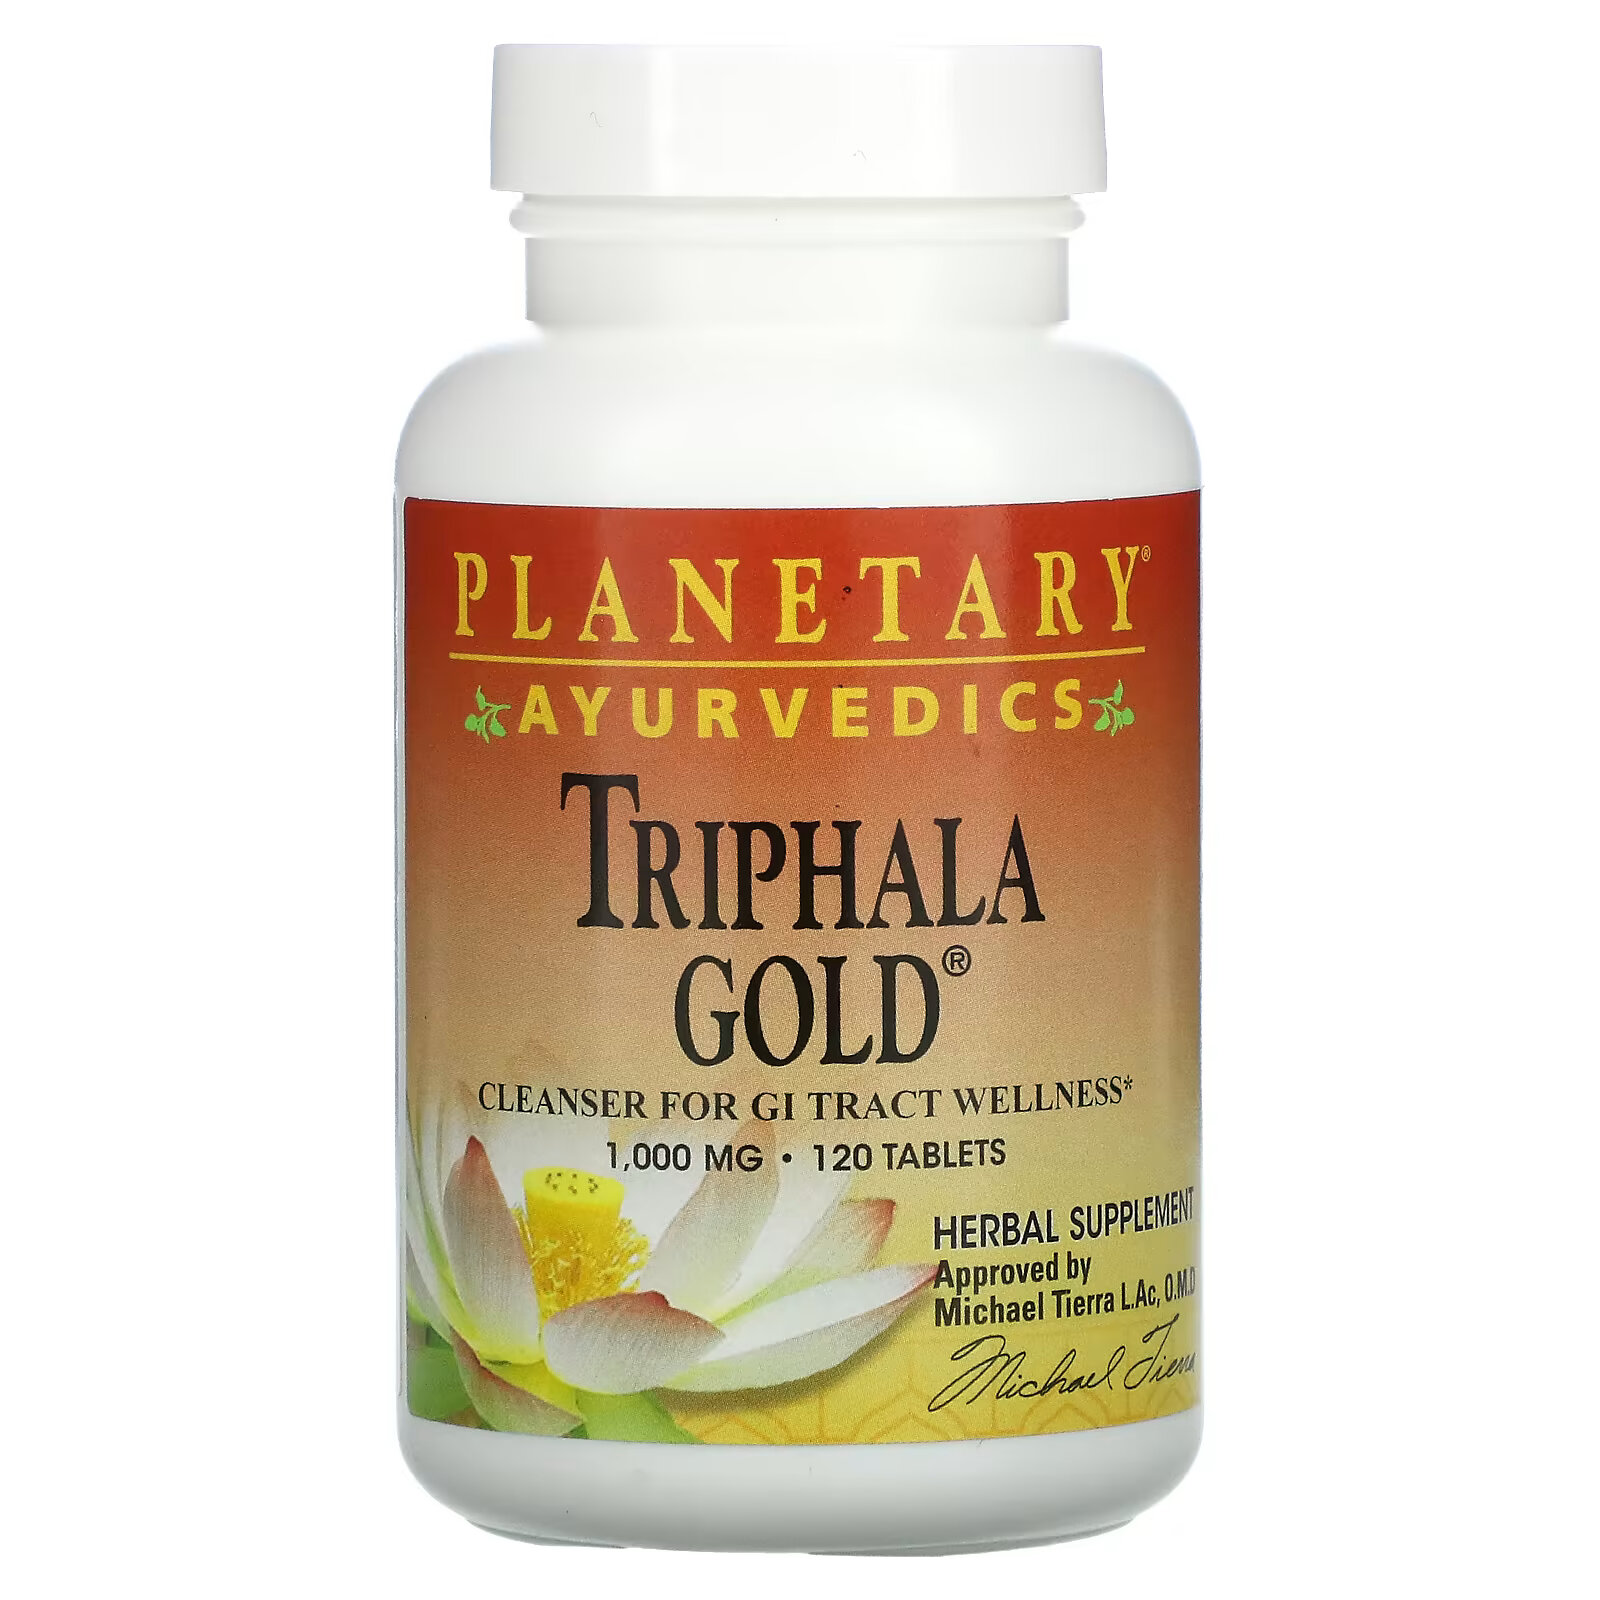 planetary herbals ayurvedics трифала 1000 мг 120 таблеток Planetary Herbals, Ayurvedics, Triphala Gold, 1000 мг, 120 таблеток